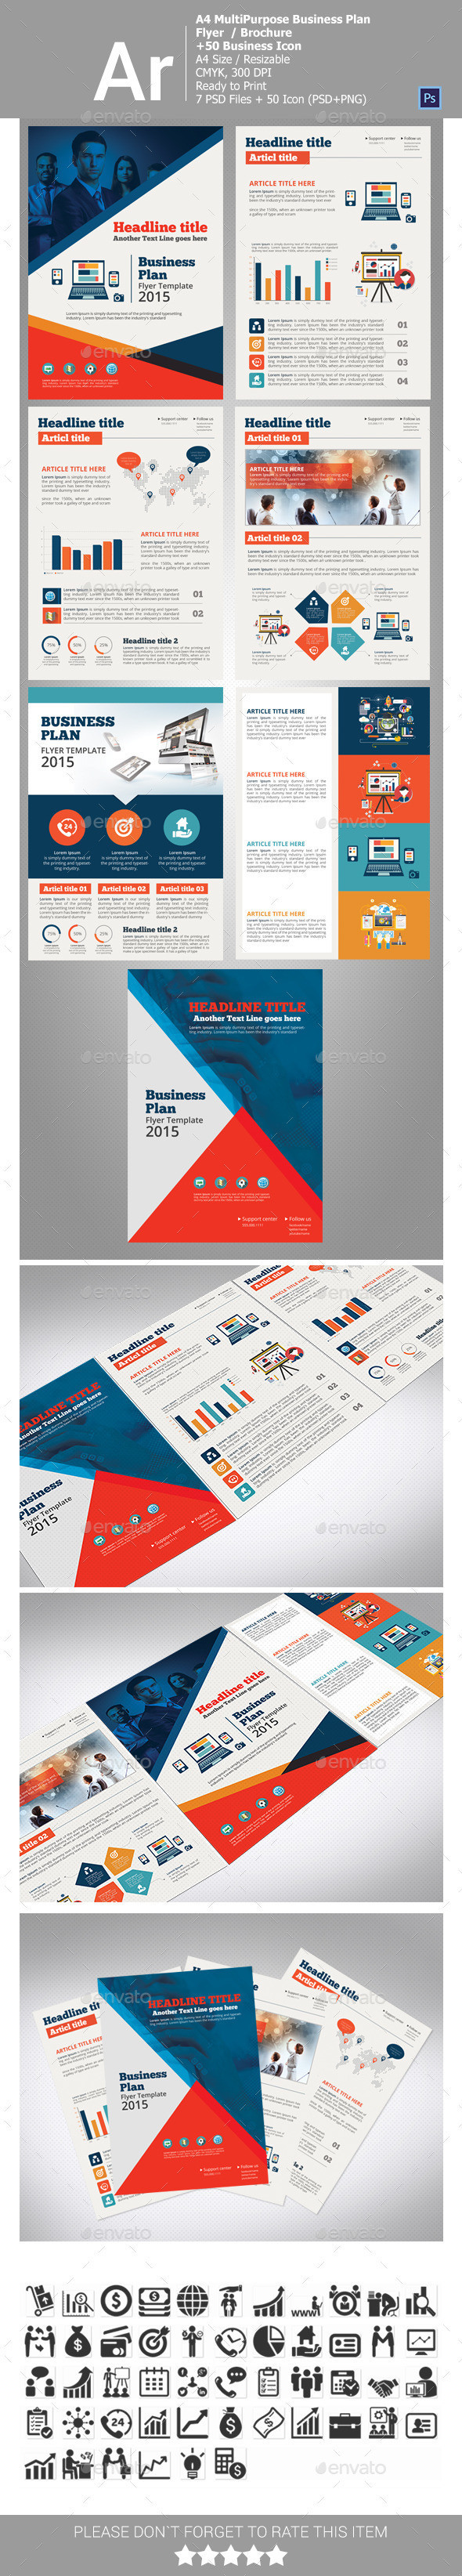 Business plan flyer   brochure vol 02 prev